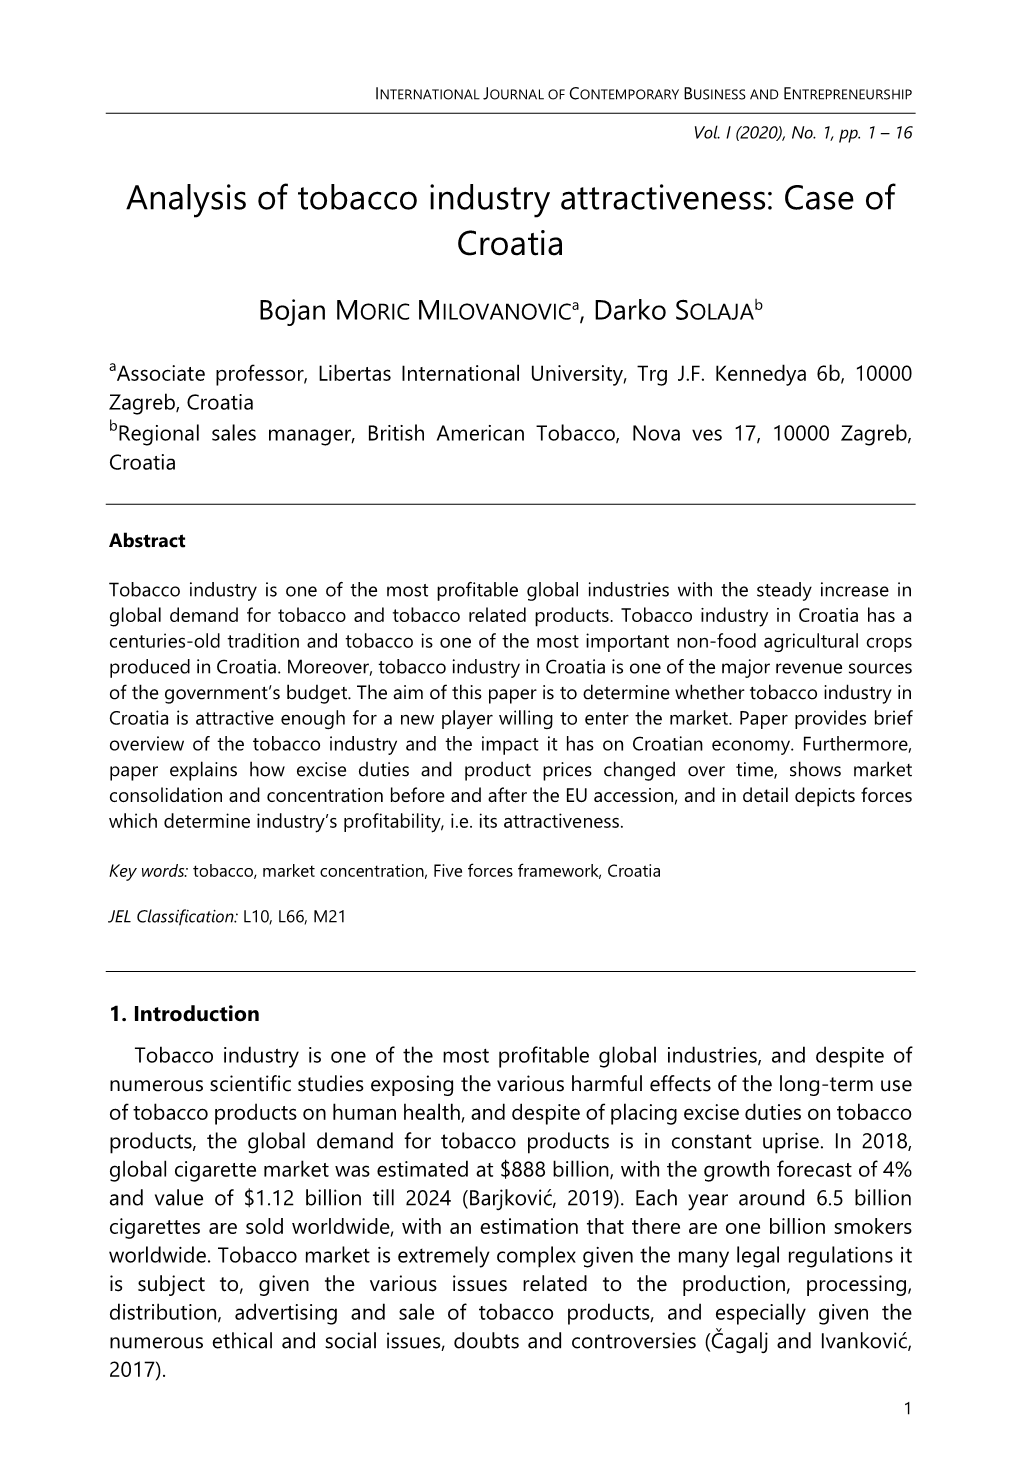 Analysis of Tobacco Industry Attractiveness: Case of Croatia